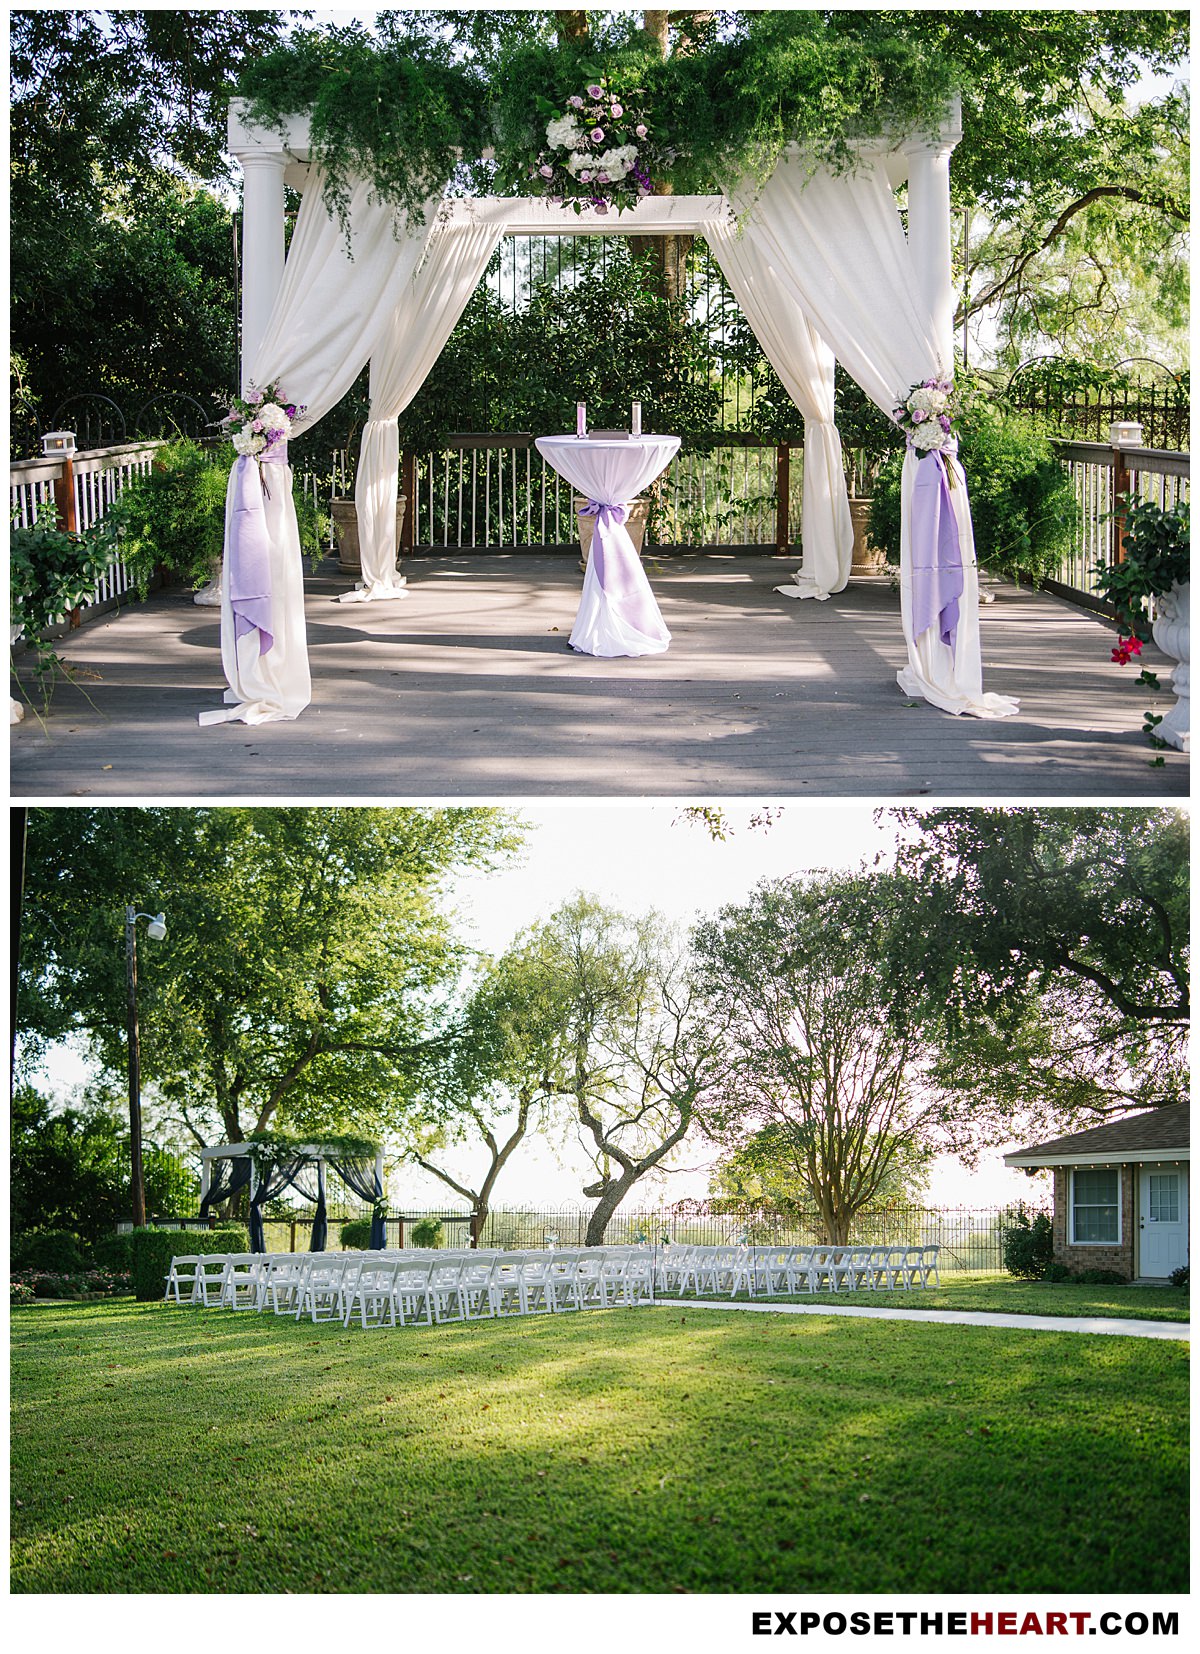 Granberry Hills Event Facility gardenside ceremony site an outdoor wedding venue in San Antonio